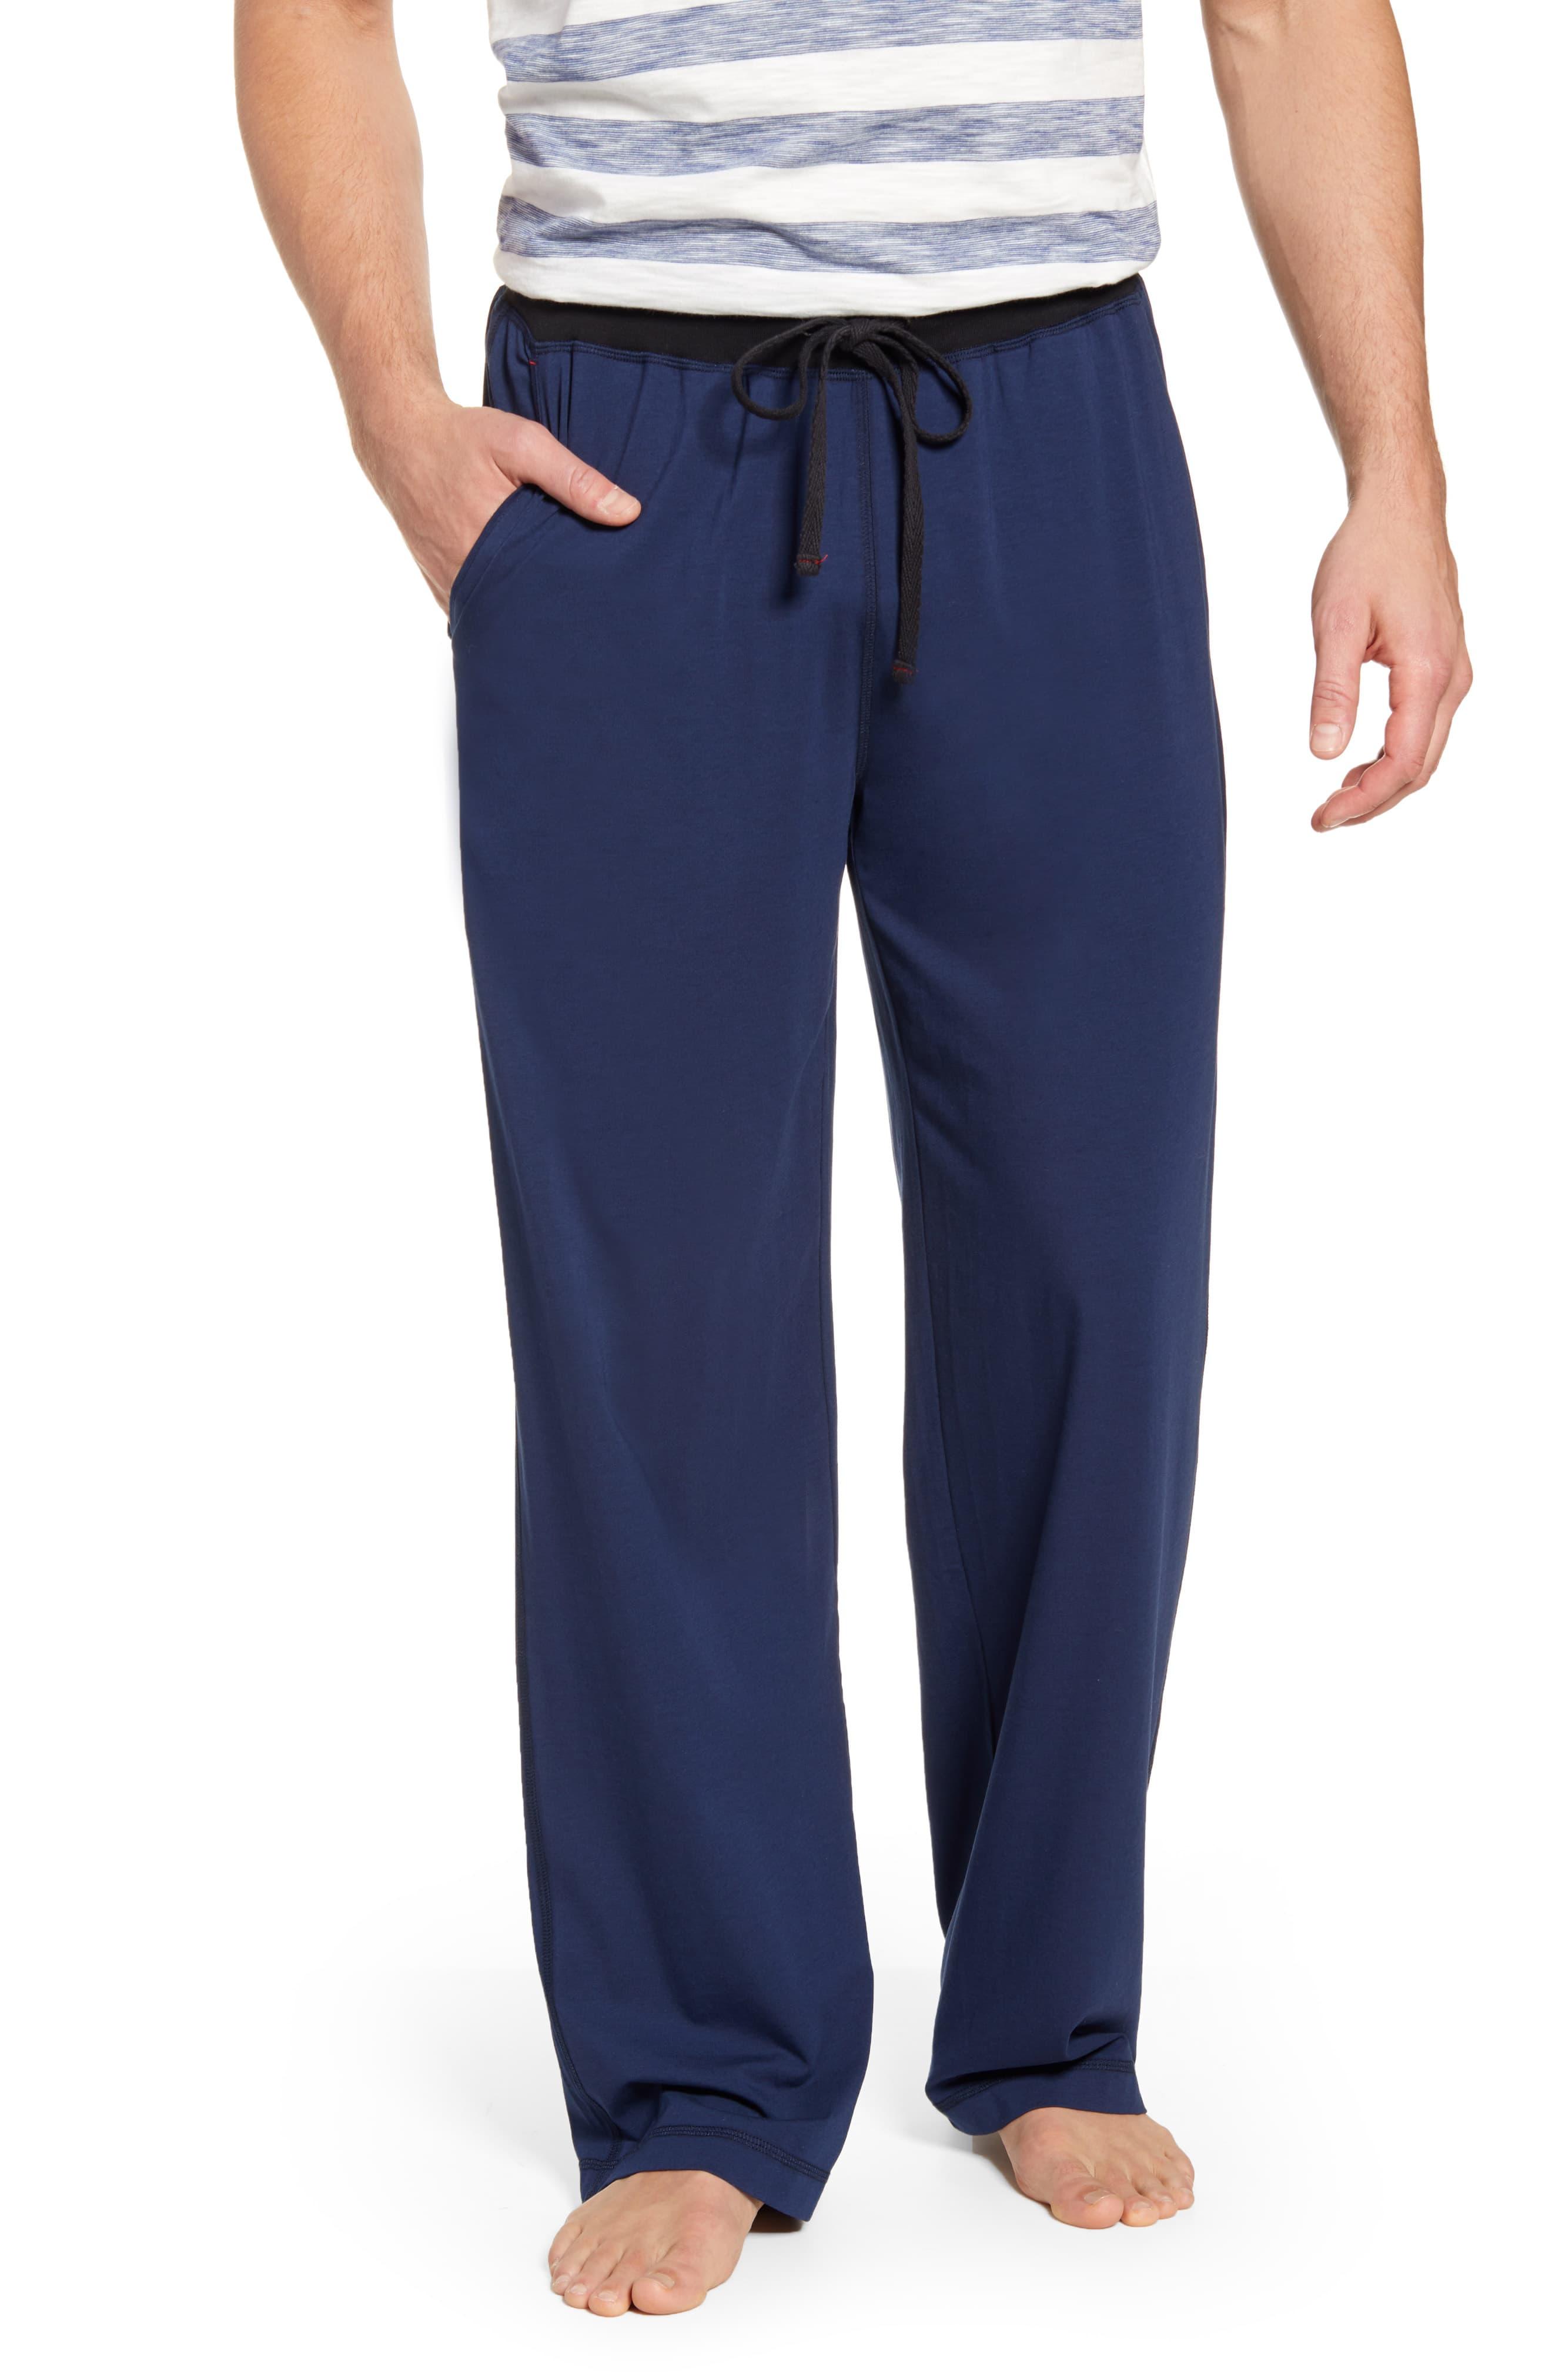 Daniel Buchler Cotton & Modal Pajama Pants in Blue for Men - Lyst